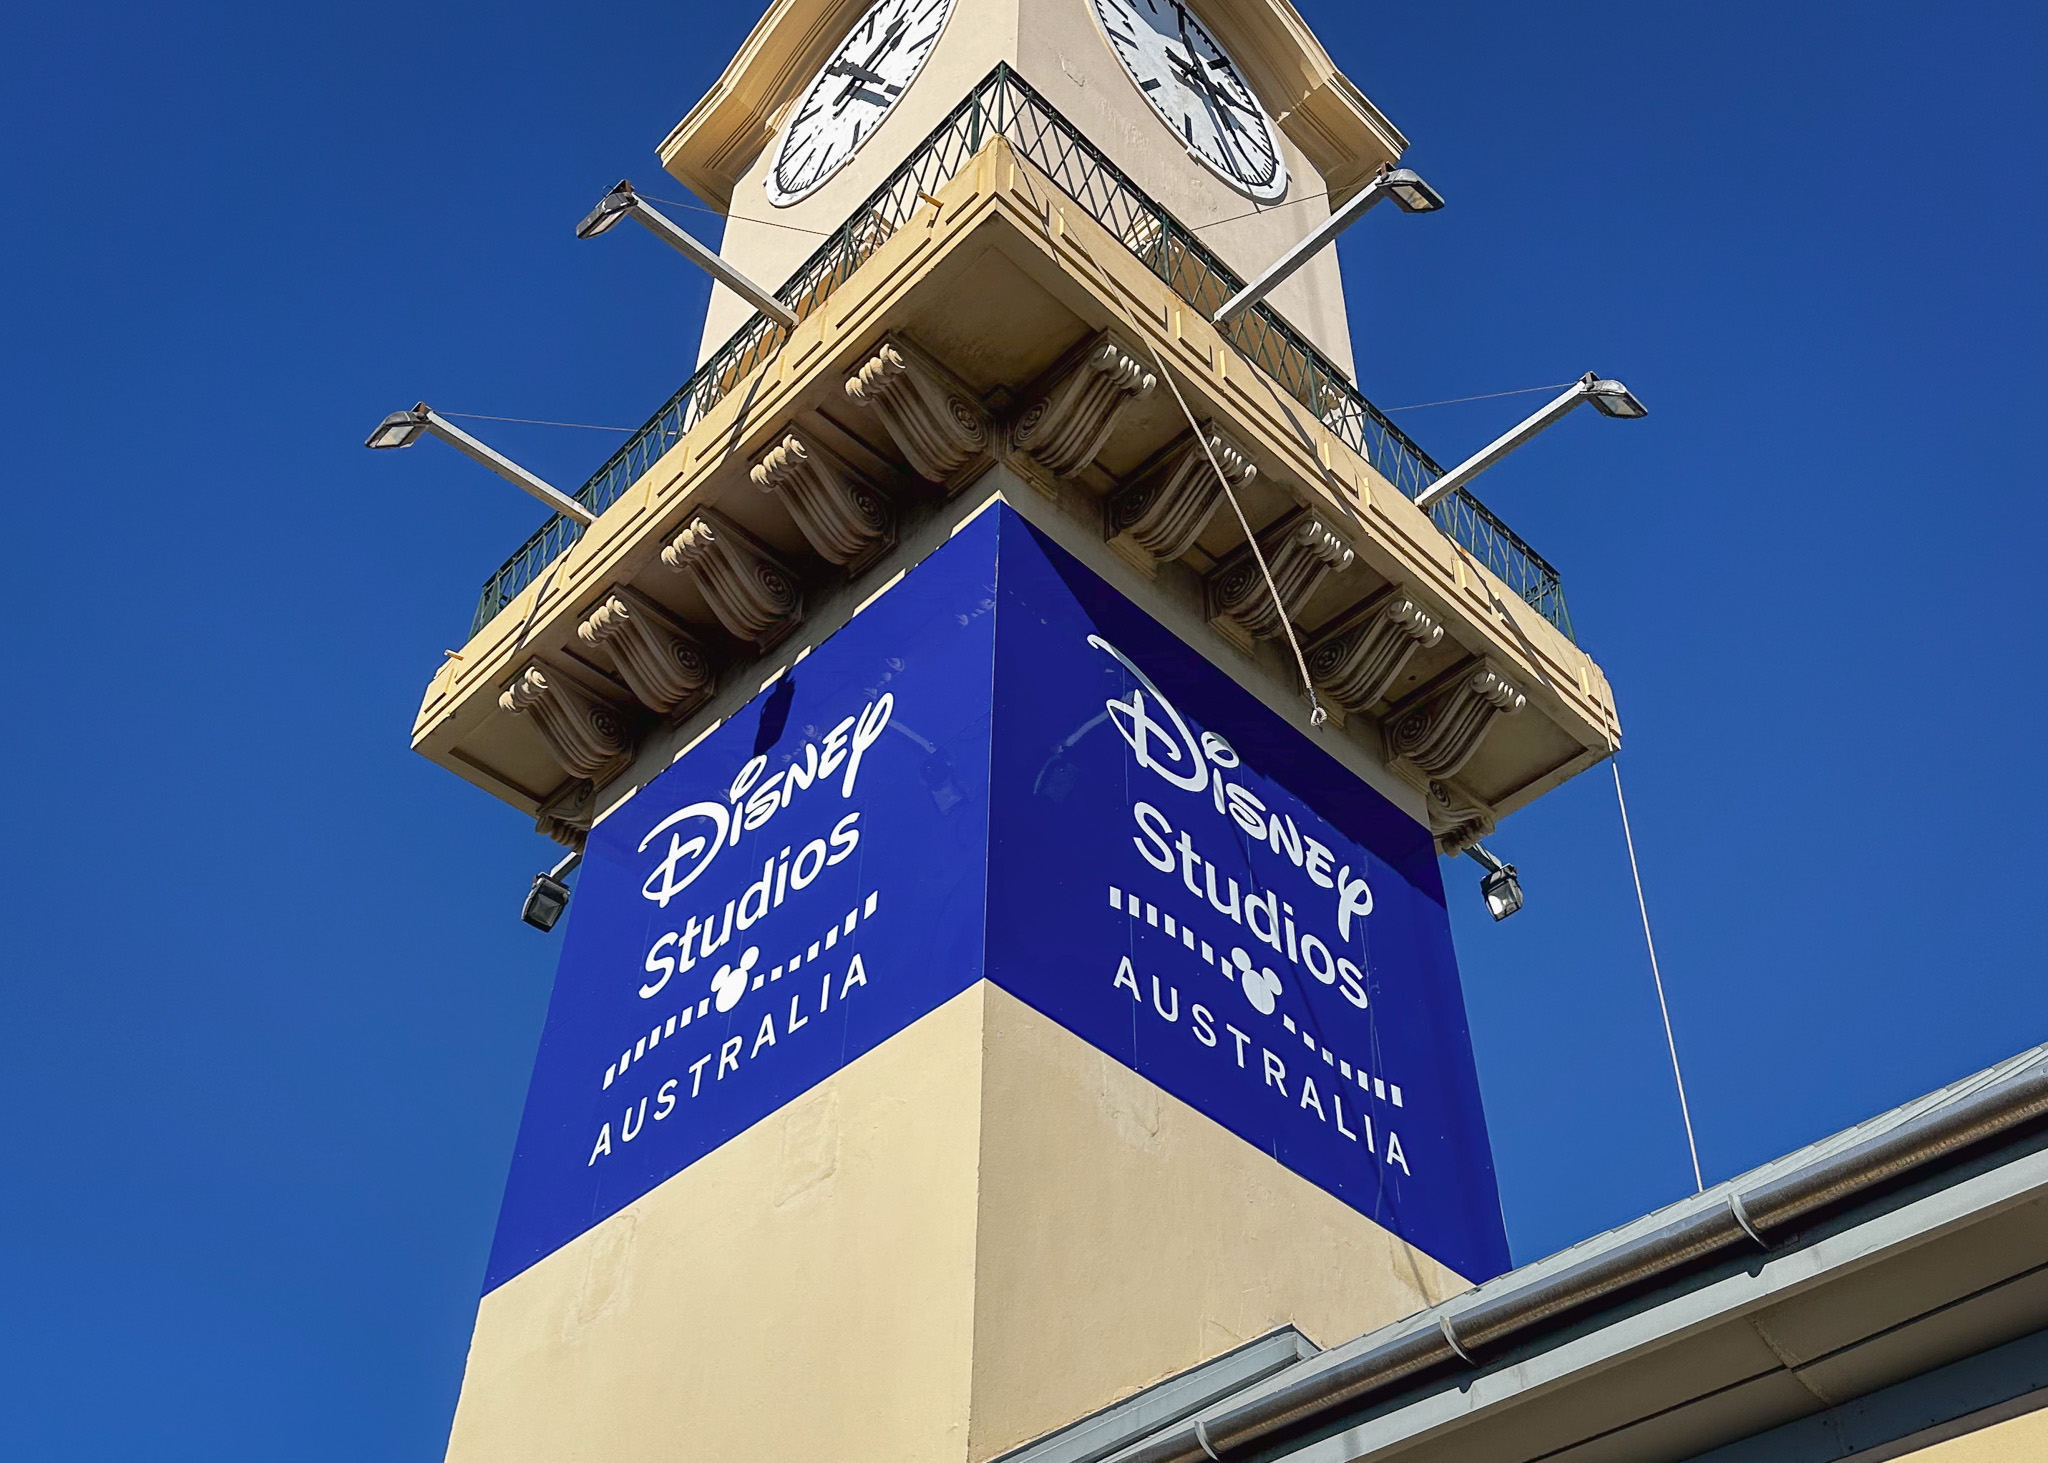 Disney Studios signage on yellow clocktower